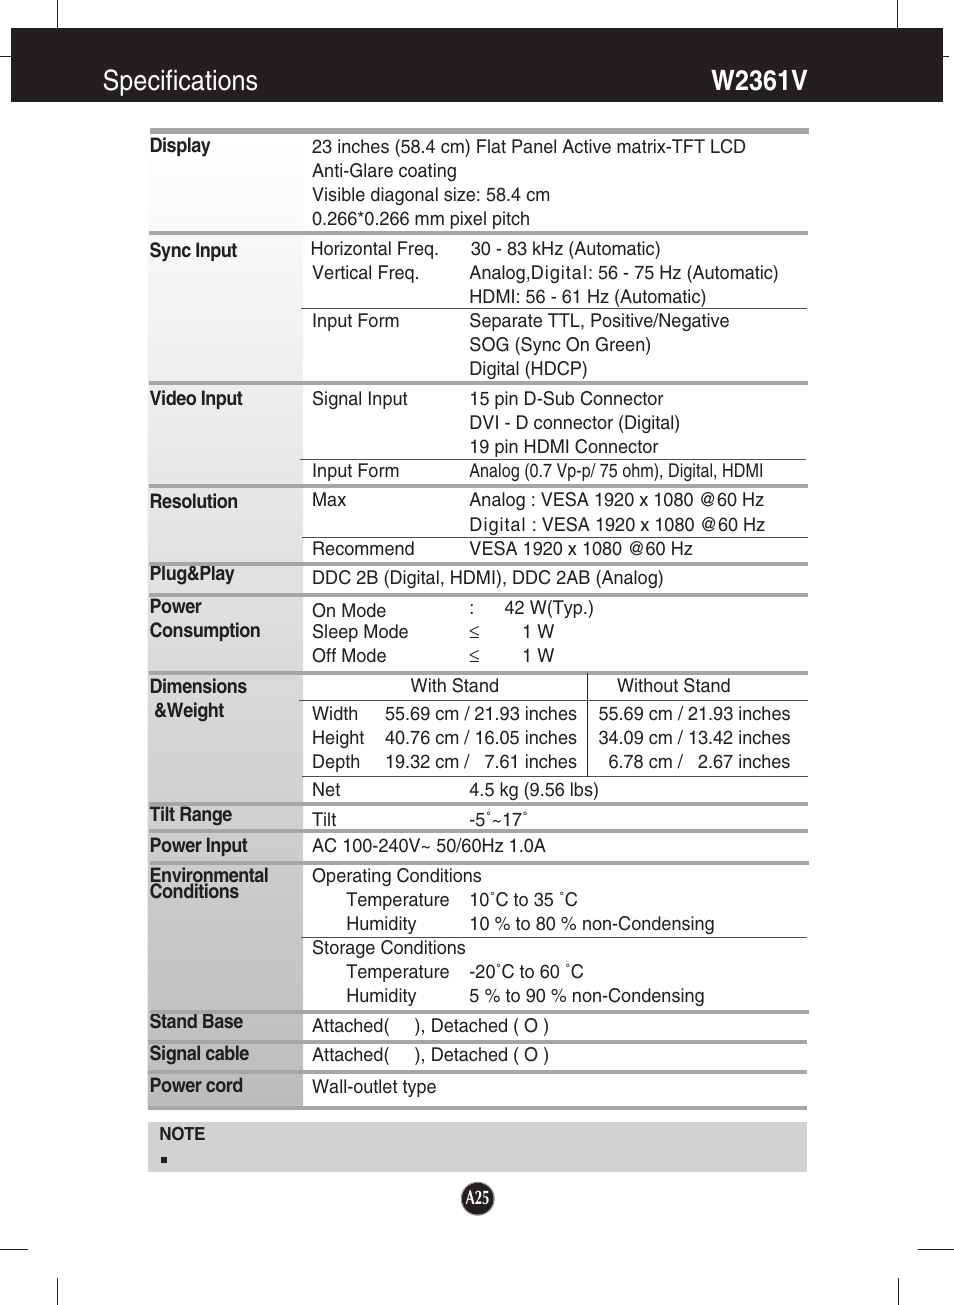 W2361v, Specifications w2361v | LG W2361V-PF User Manual | Page 26 / 29